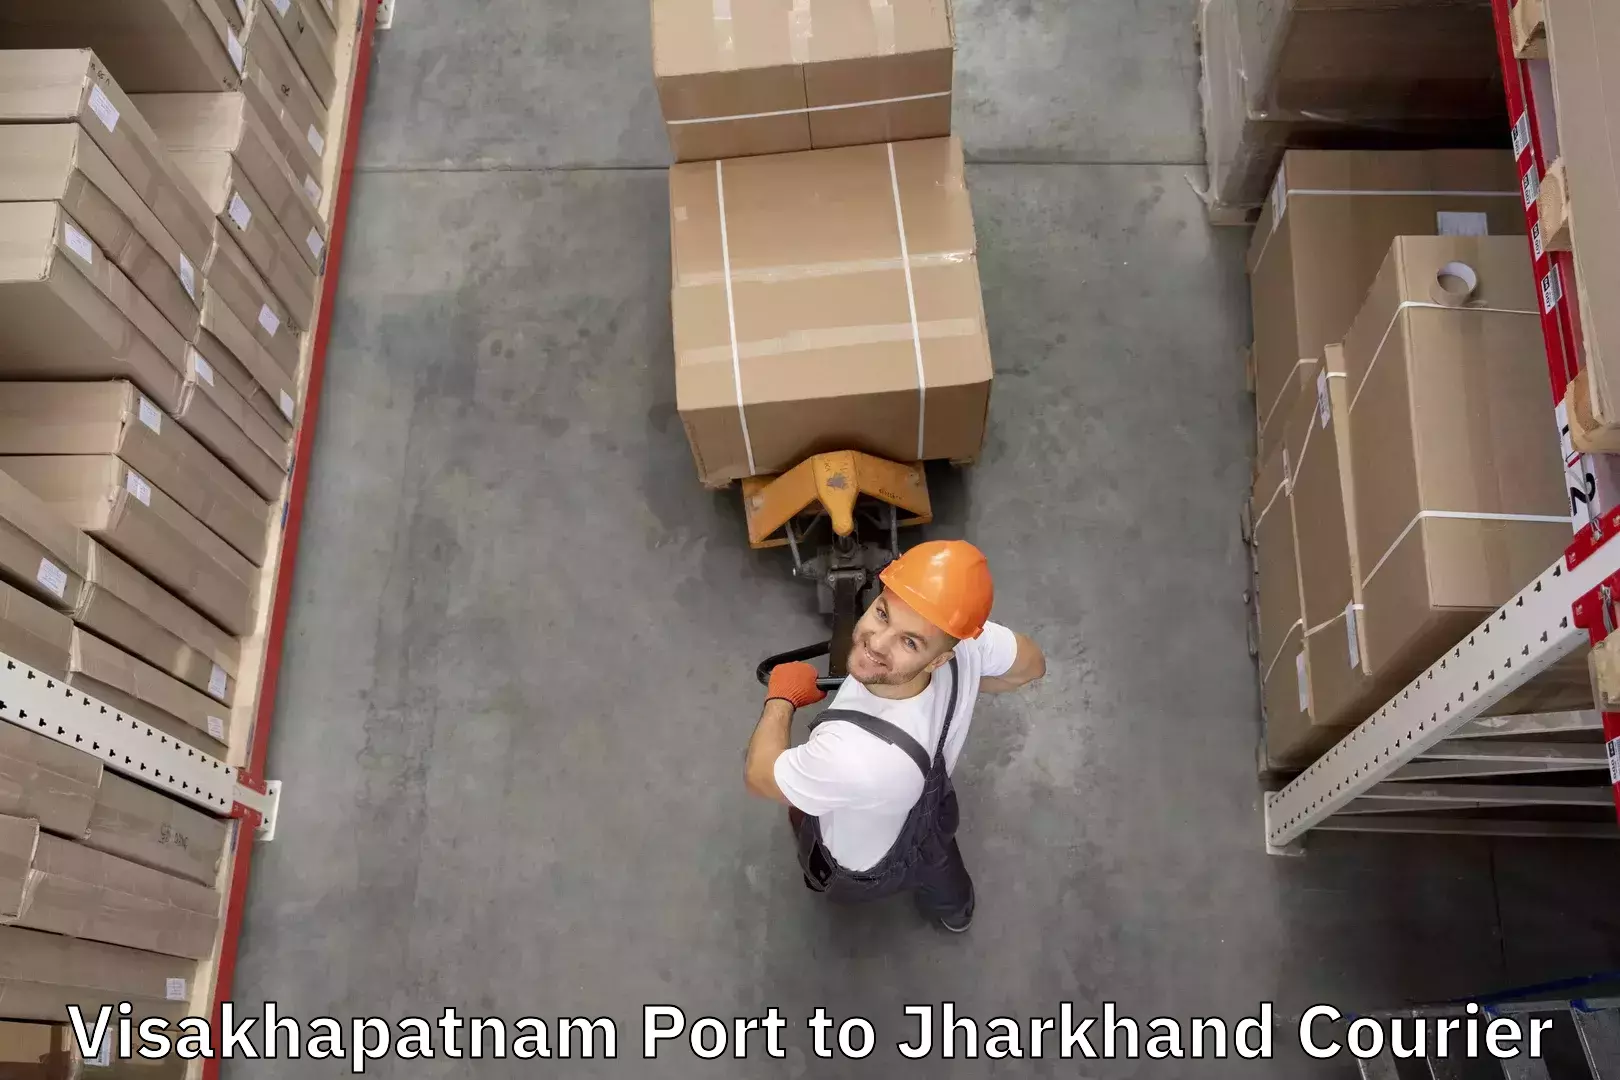 Luggage delivery app Visakhapatnam Port to Bokaro Steel City